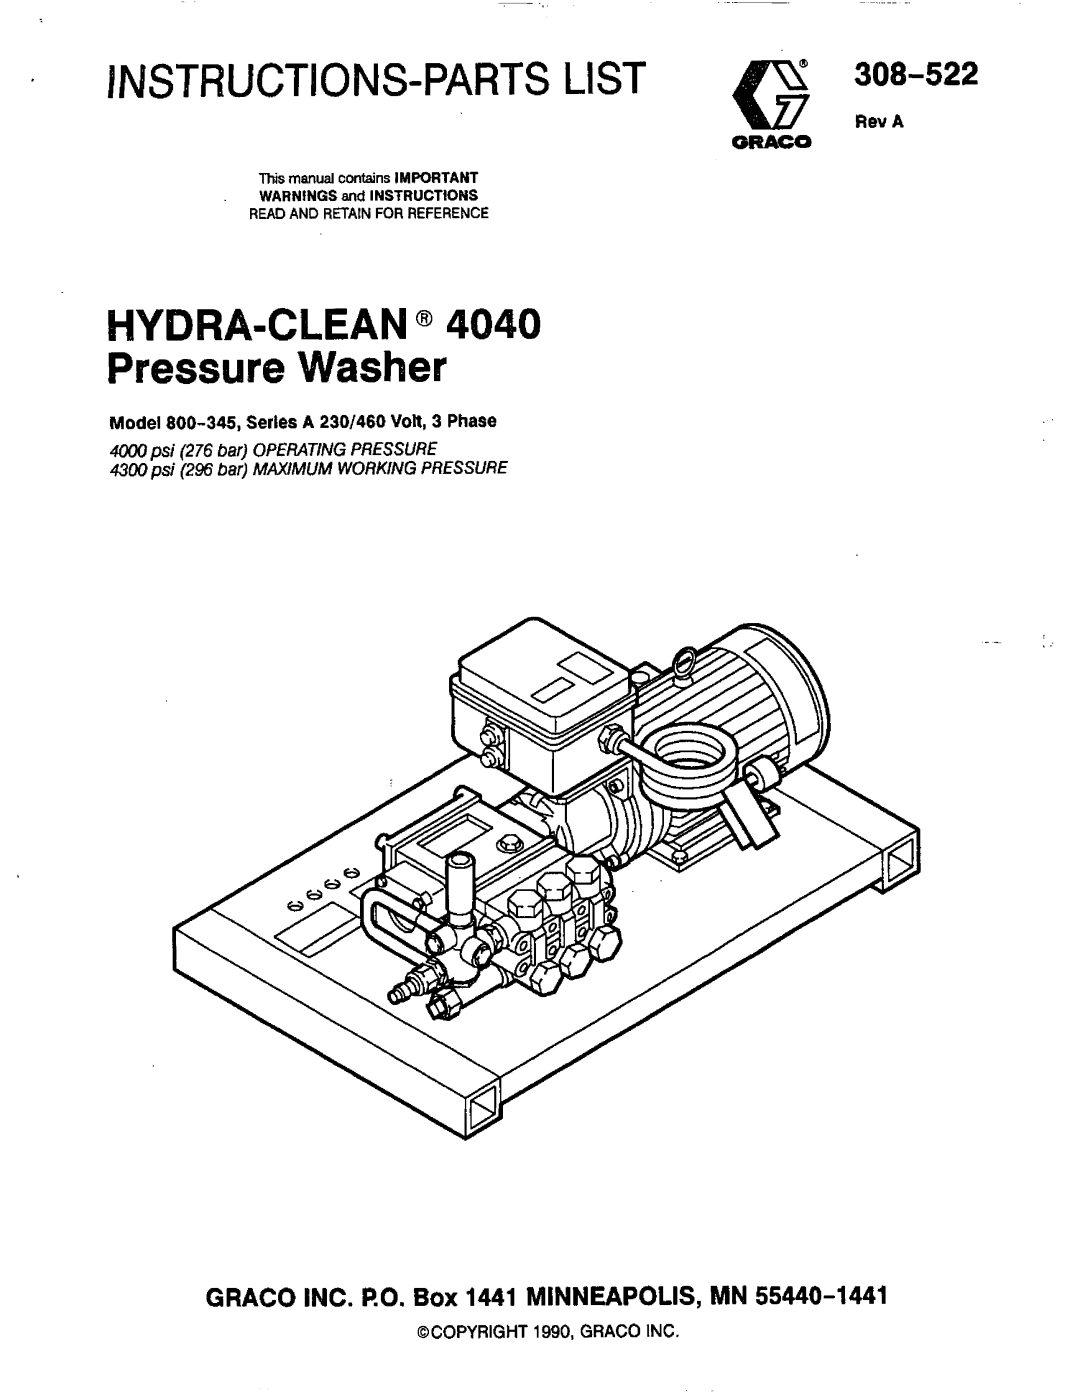 Graco Inc 800-345 manual Instructions-Partslist, HYDRA-CLEAN@ Pressure Washer, GRACO INC. RO. Box 1441 MINNEAPOLIS, MN 